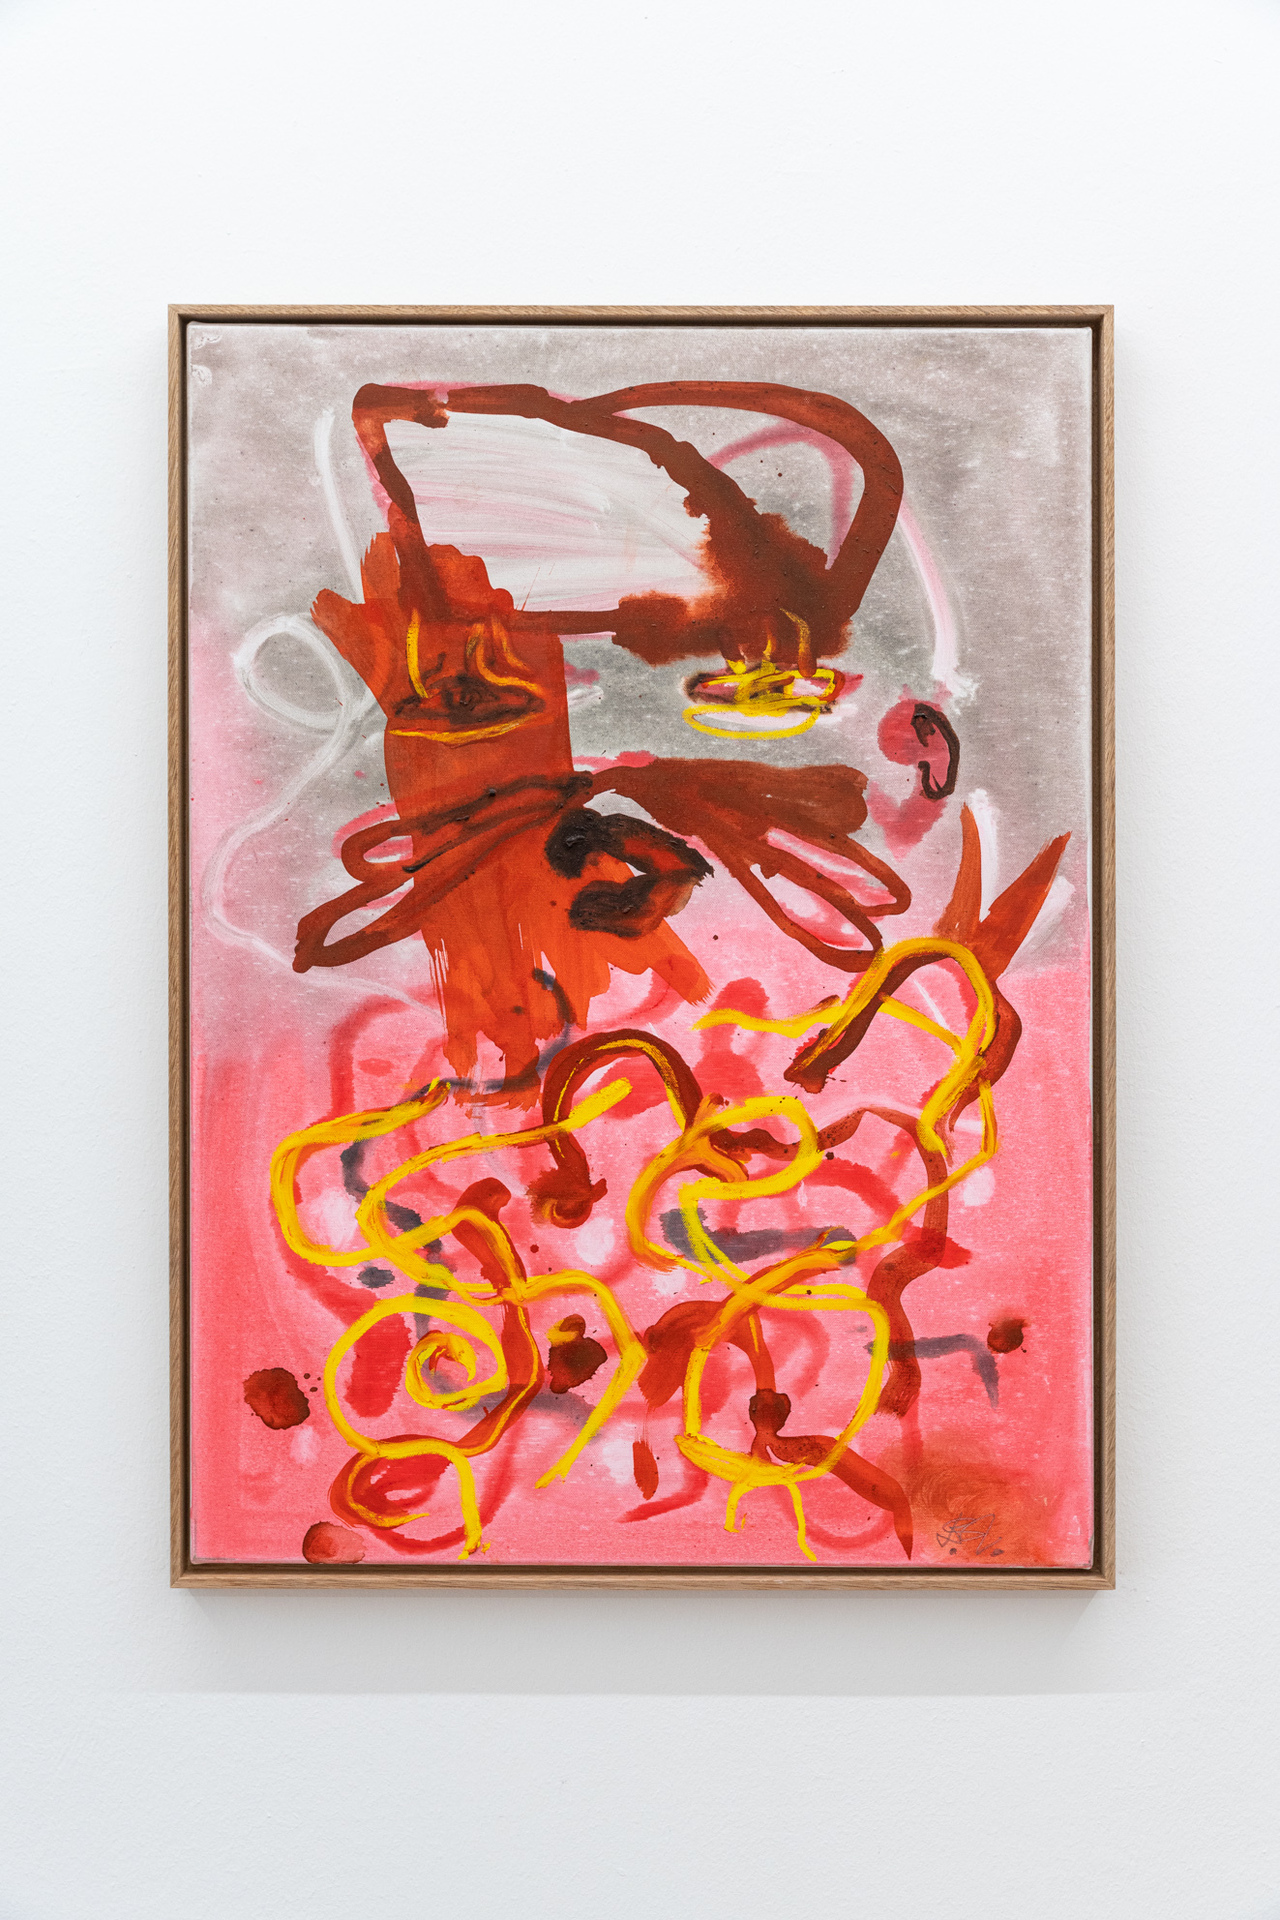 Boban Andjelkovic, "Tête Rouge", 2021, oil on canvas, 84,5 x 61,5 cm